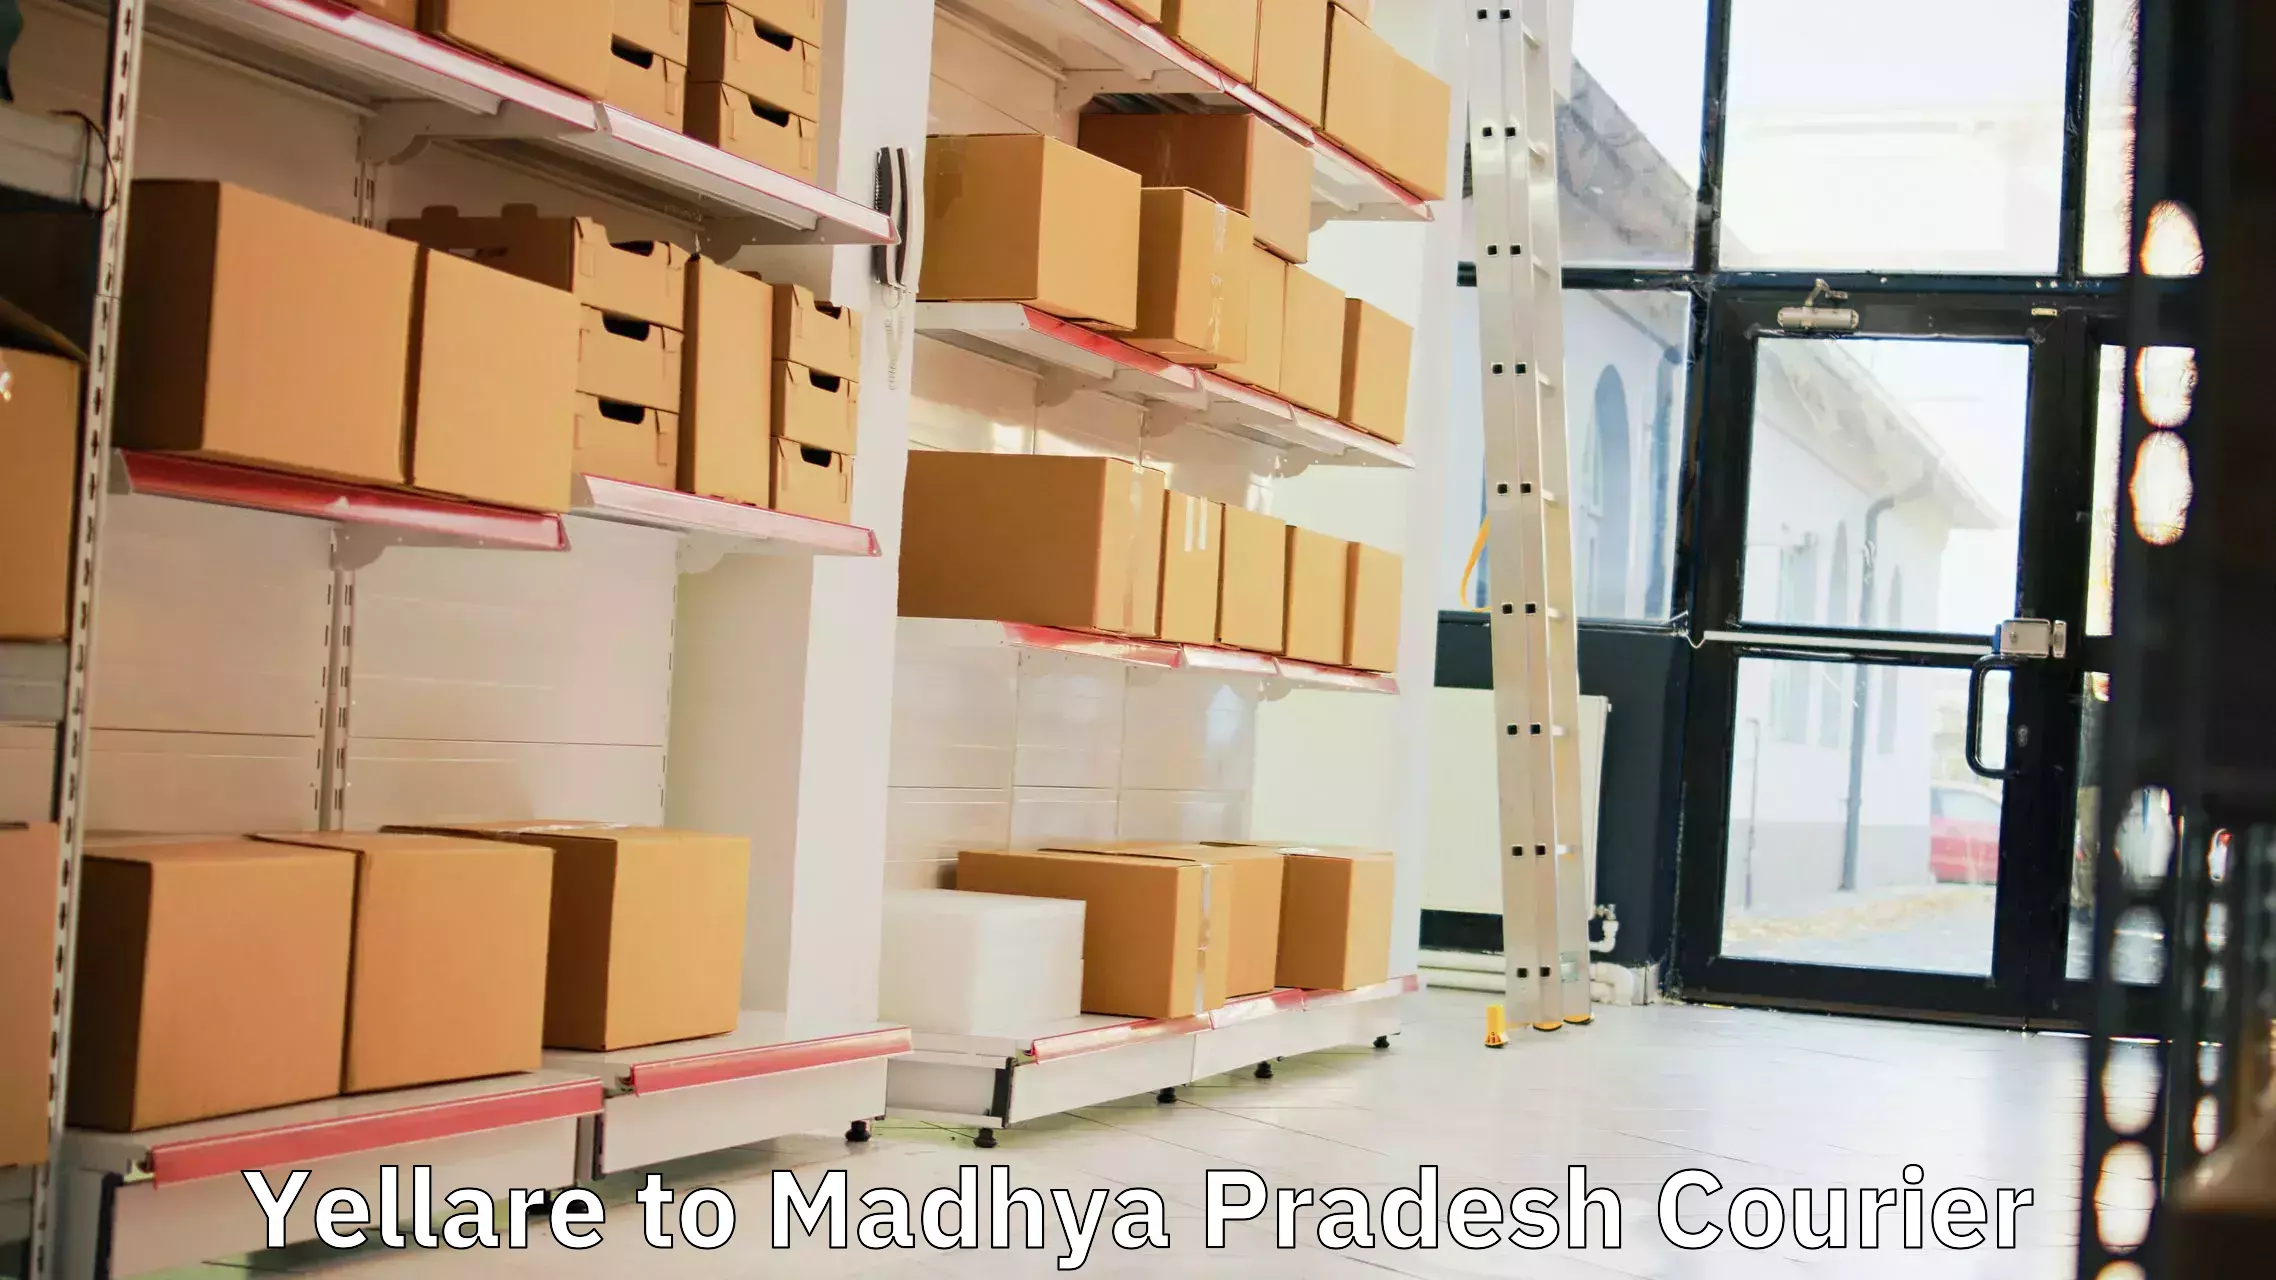 Reliable delivery network Yellare to Madhya Pradesh